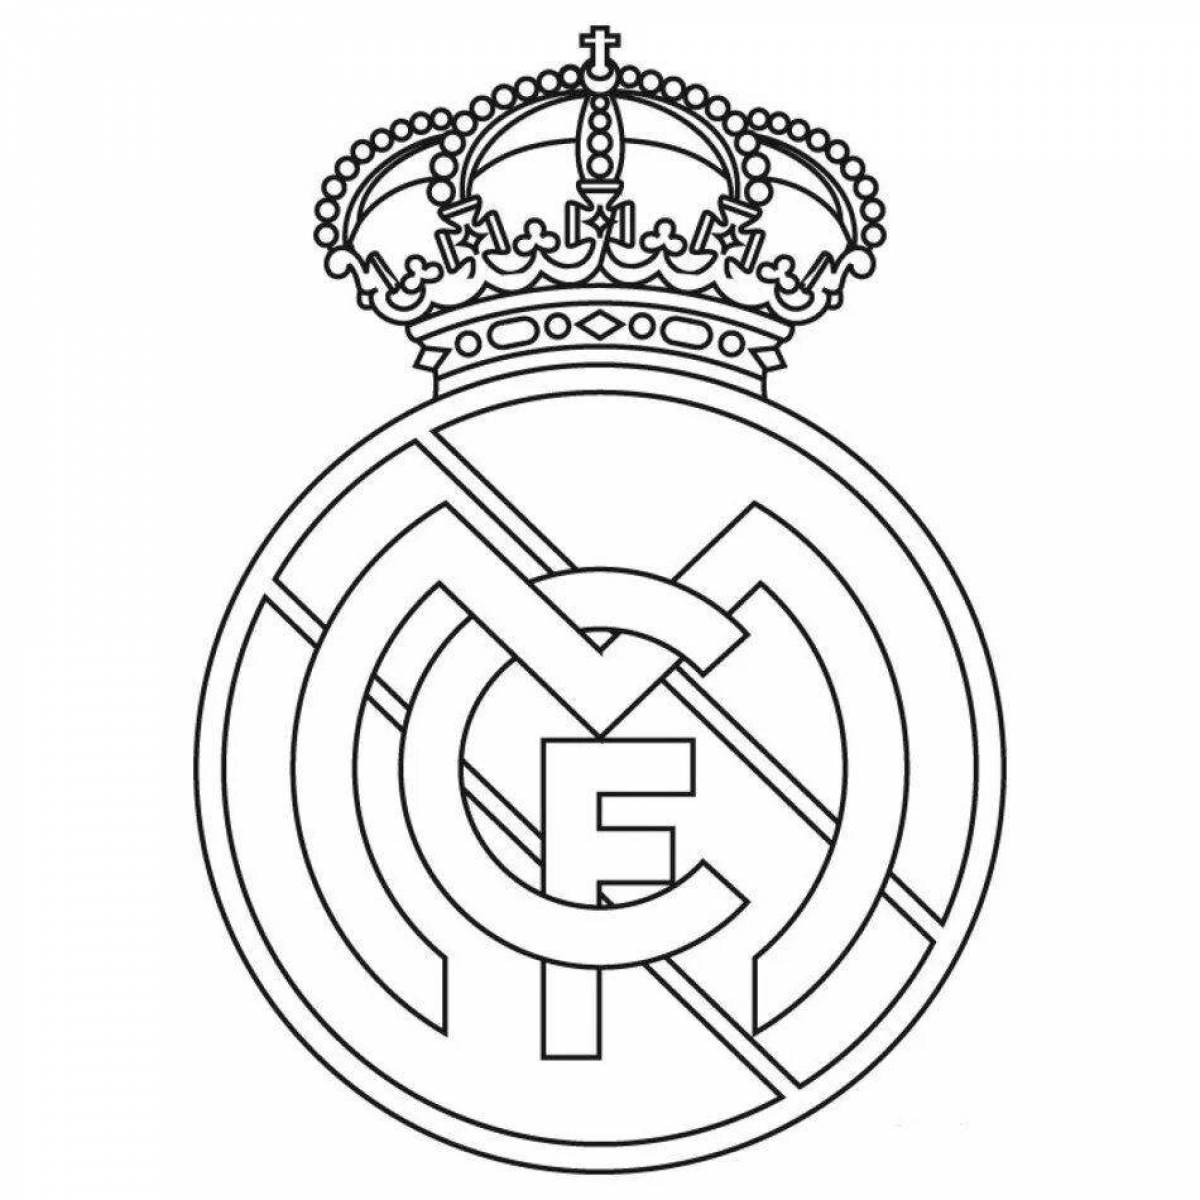 Football club emblems #6